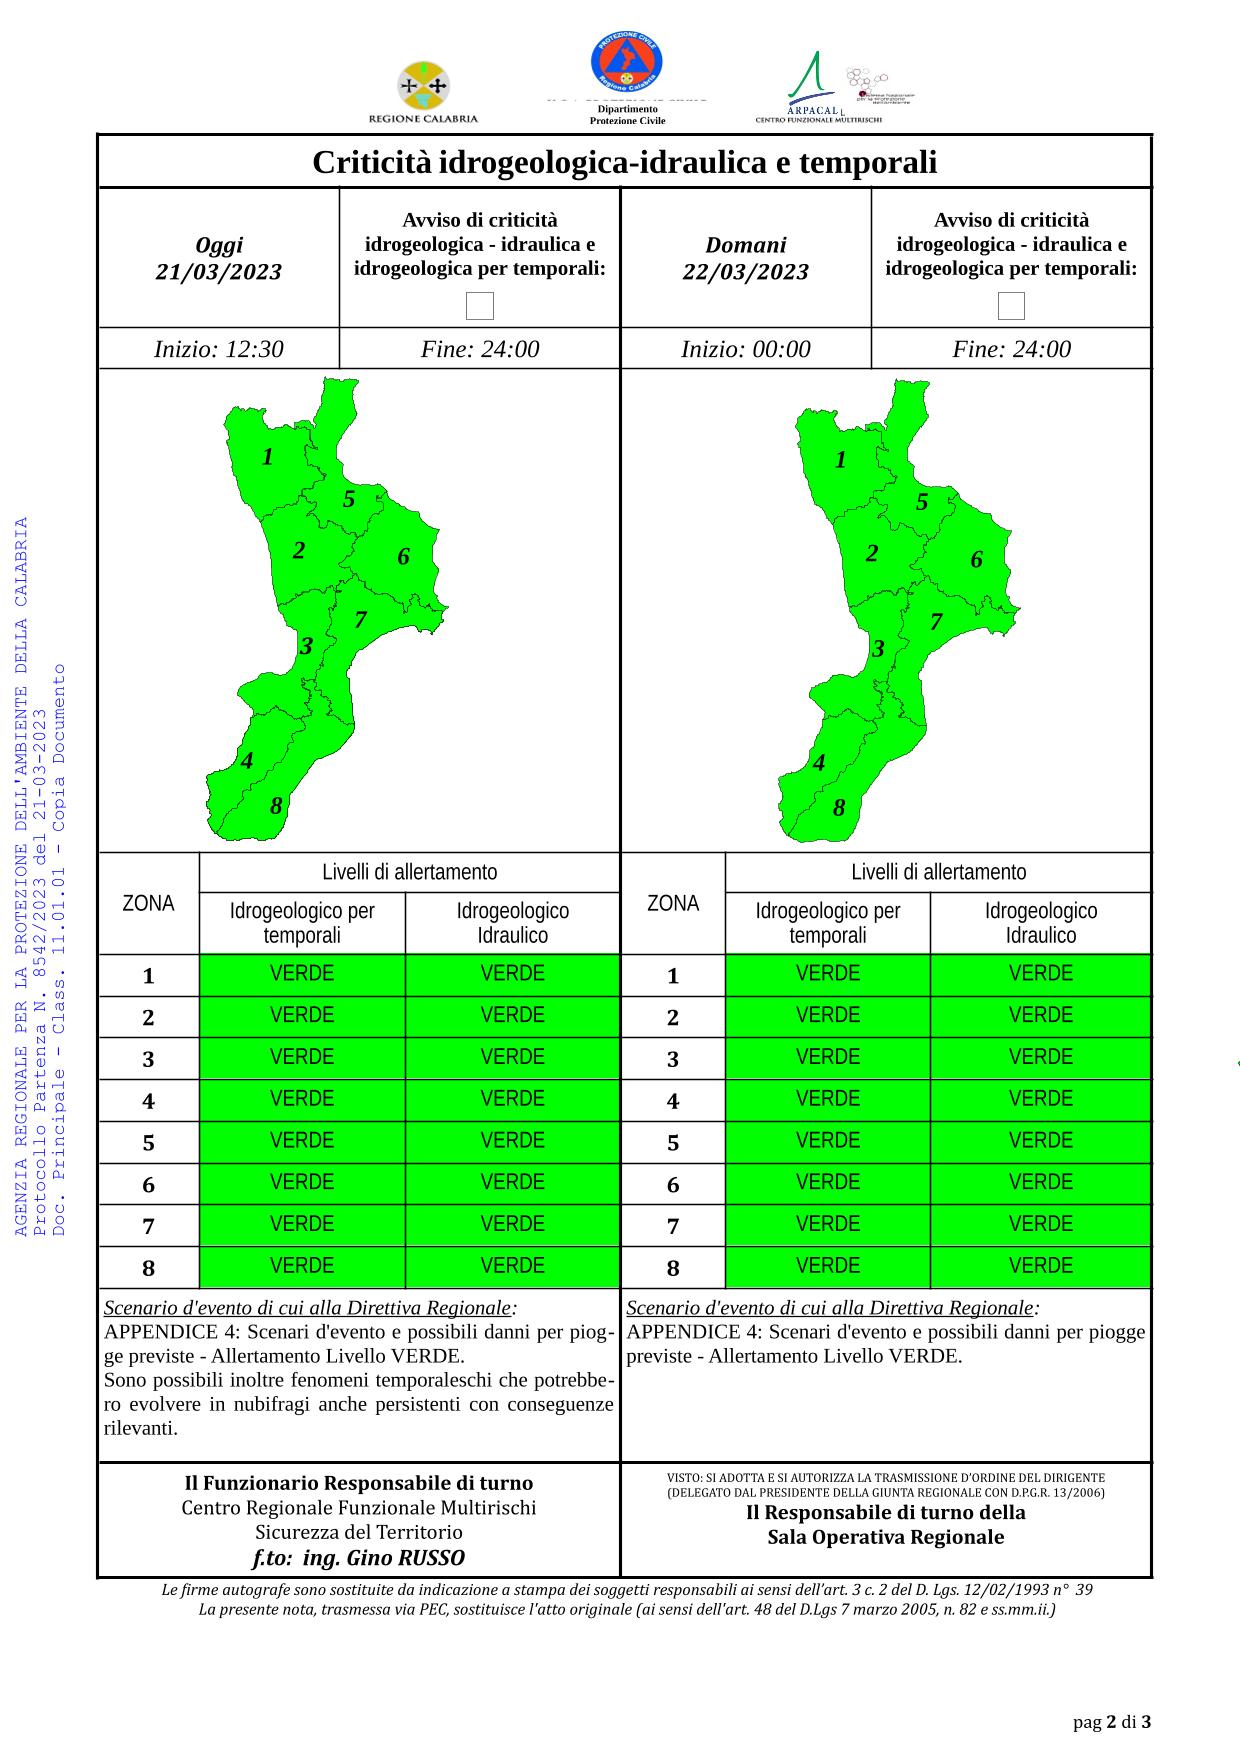 Criticità idrogeologica-idraulica e temporali in Calabria 21-03-2023